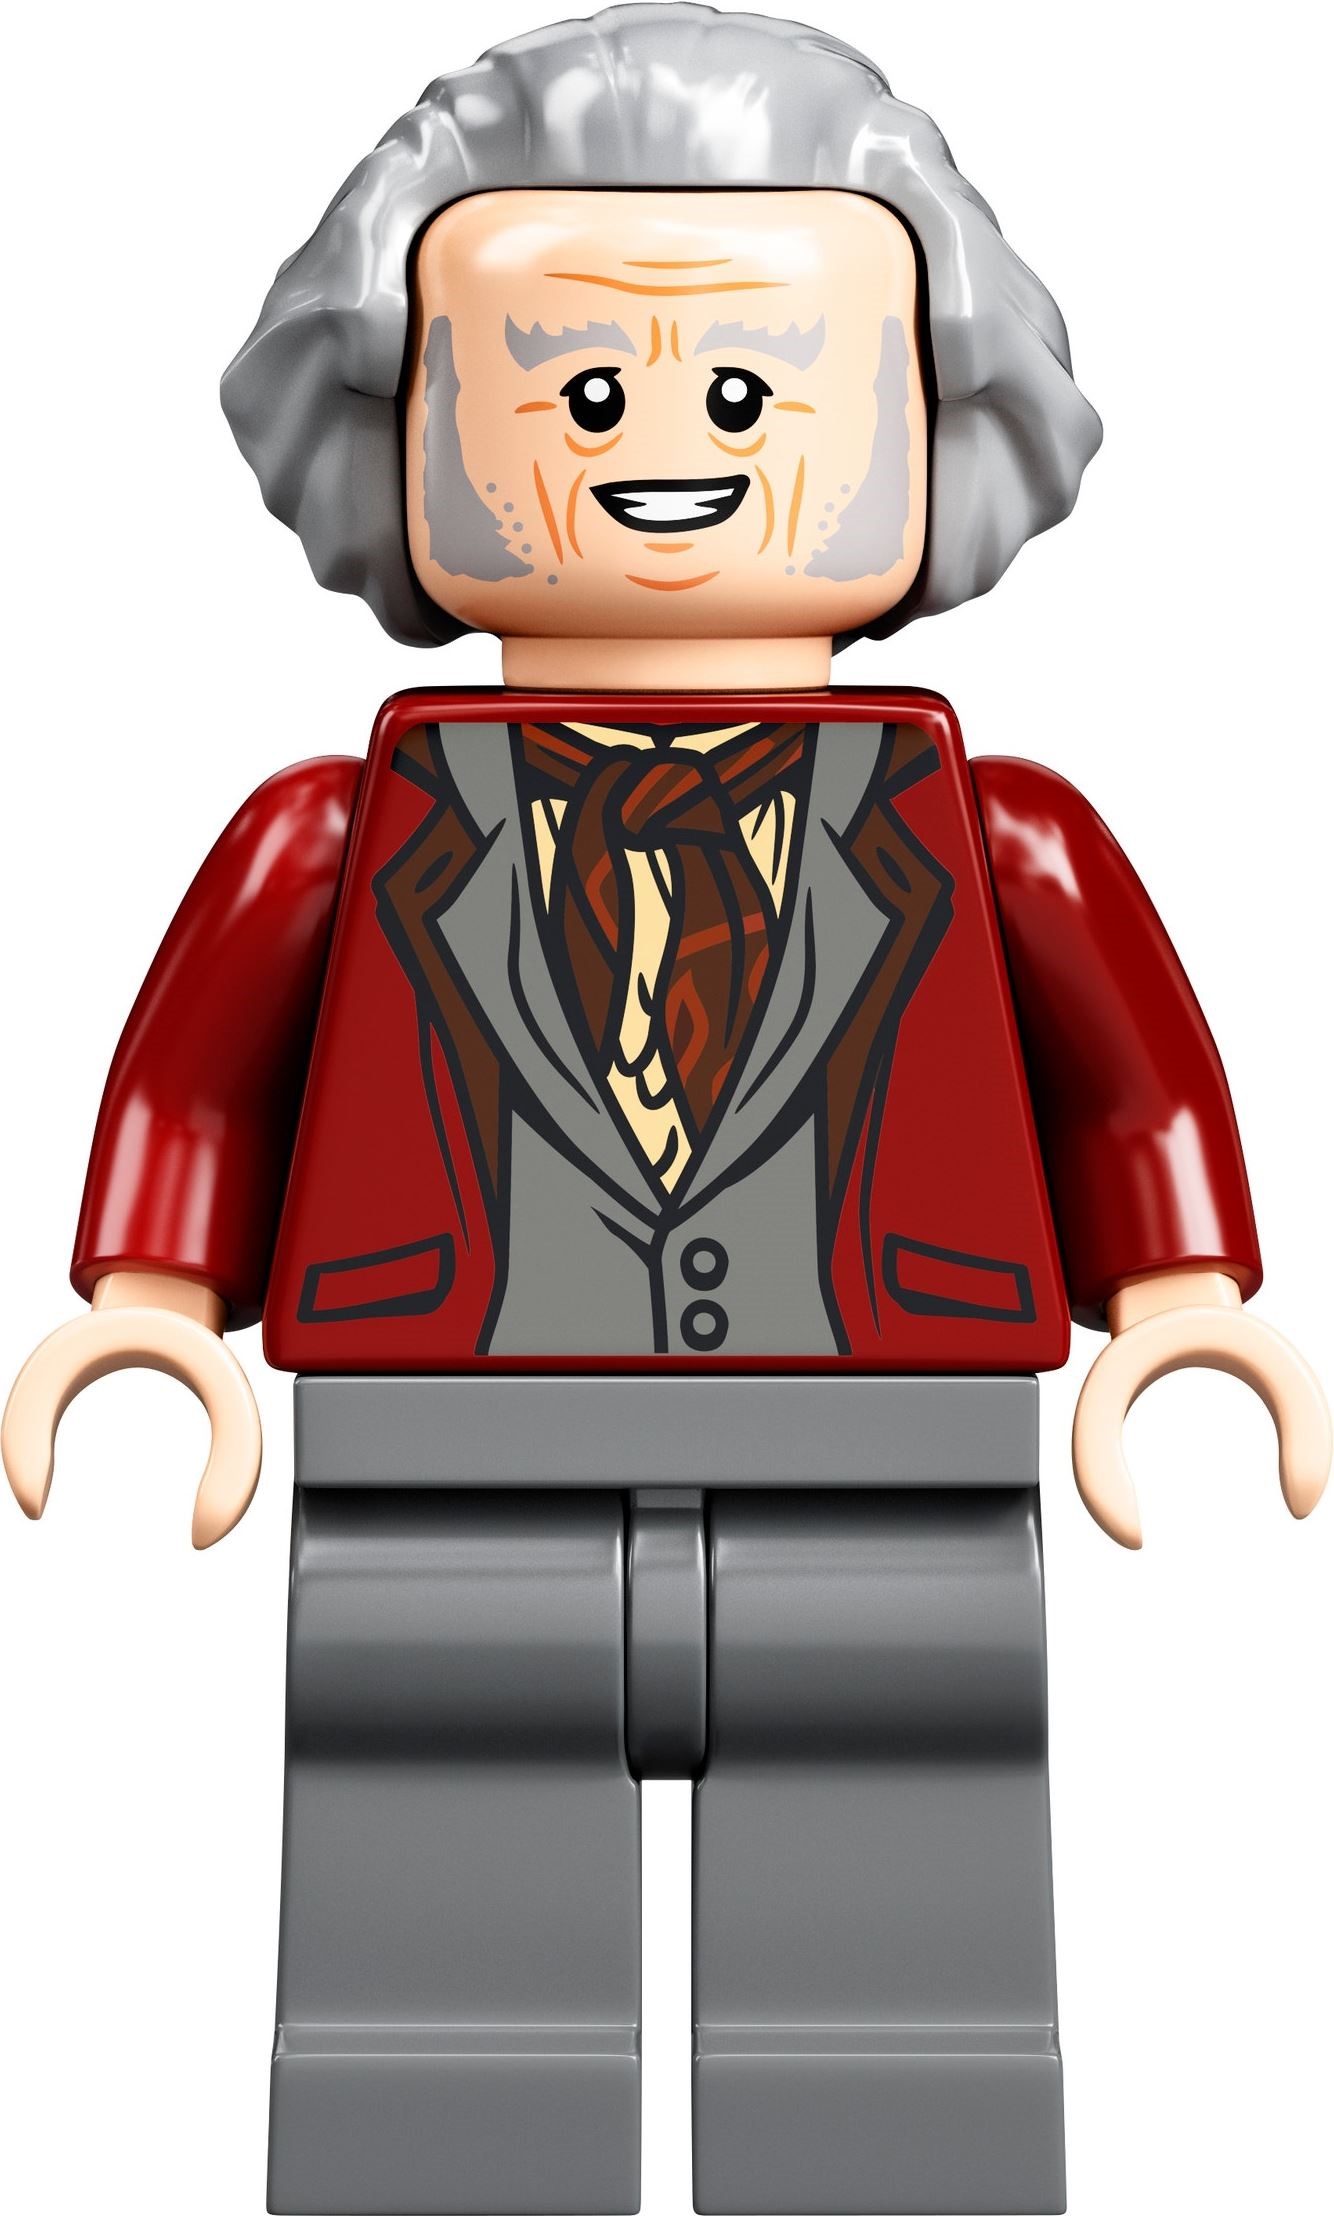 Details about   Harry Potter Genuine Lego Minifigure OLLIVANDER 